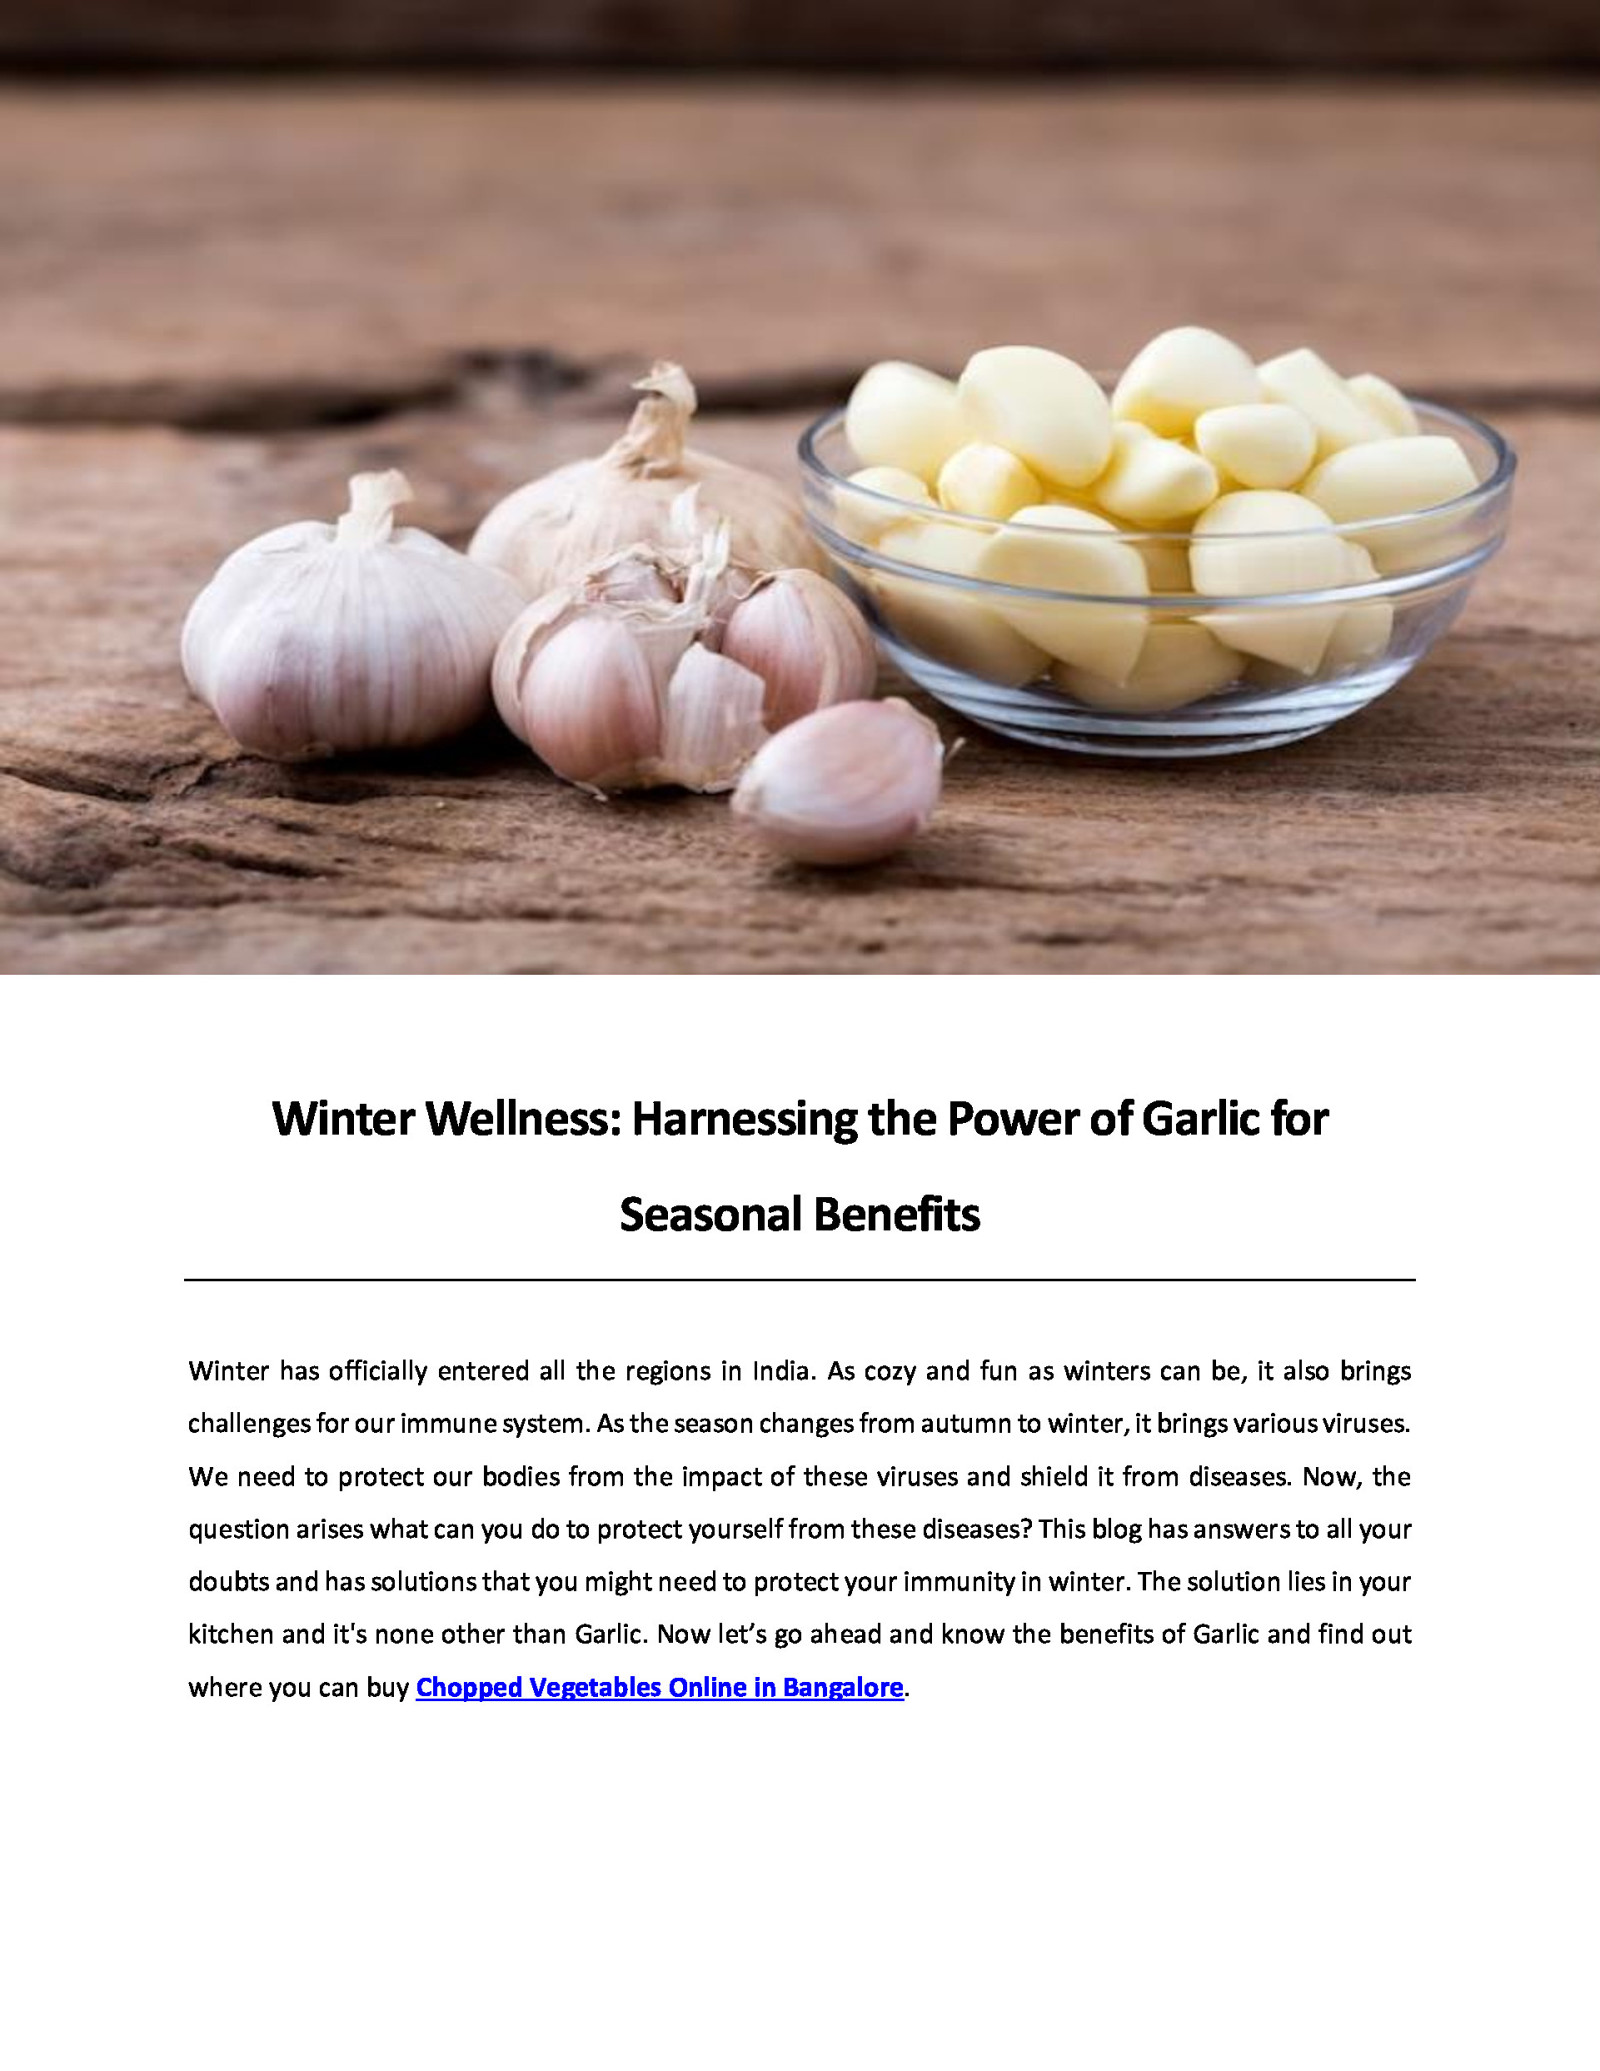 Winter Wellness: Harnessing the Power of Garlic for Seasonal Benefits